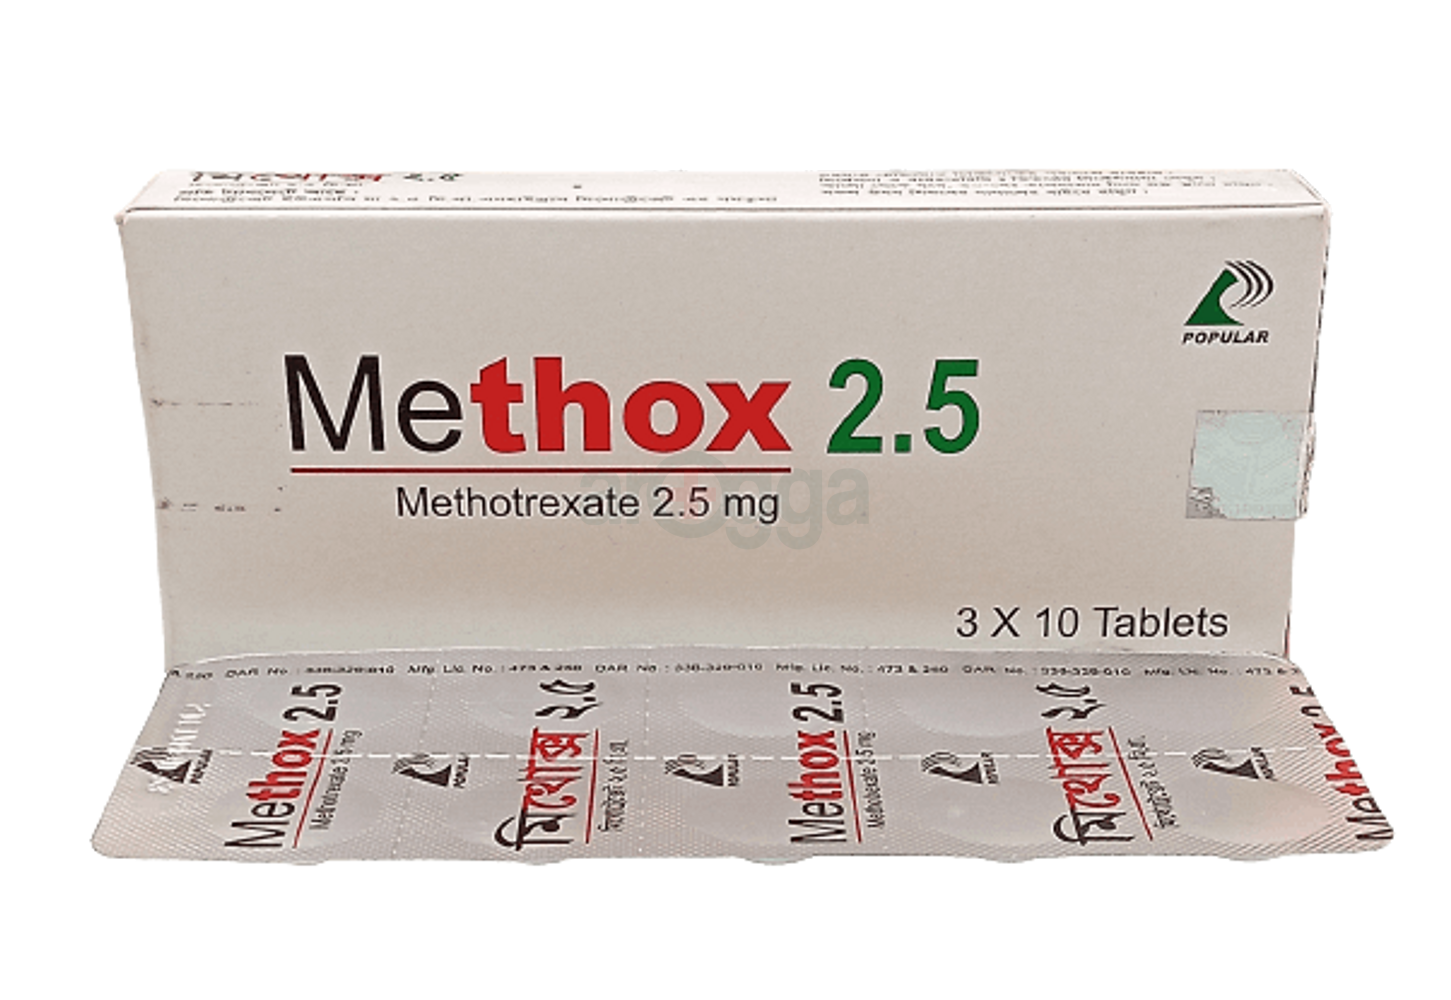 Methox 2.5